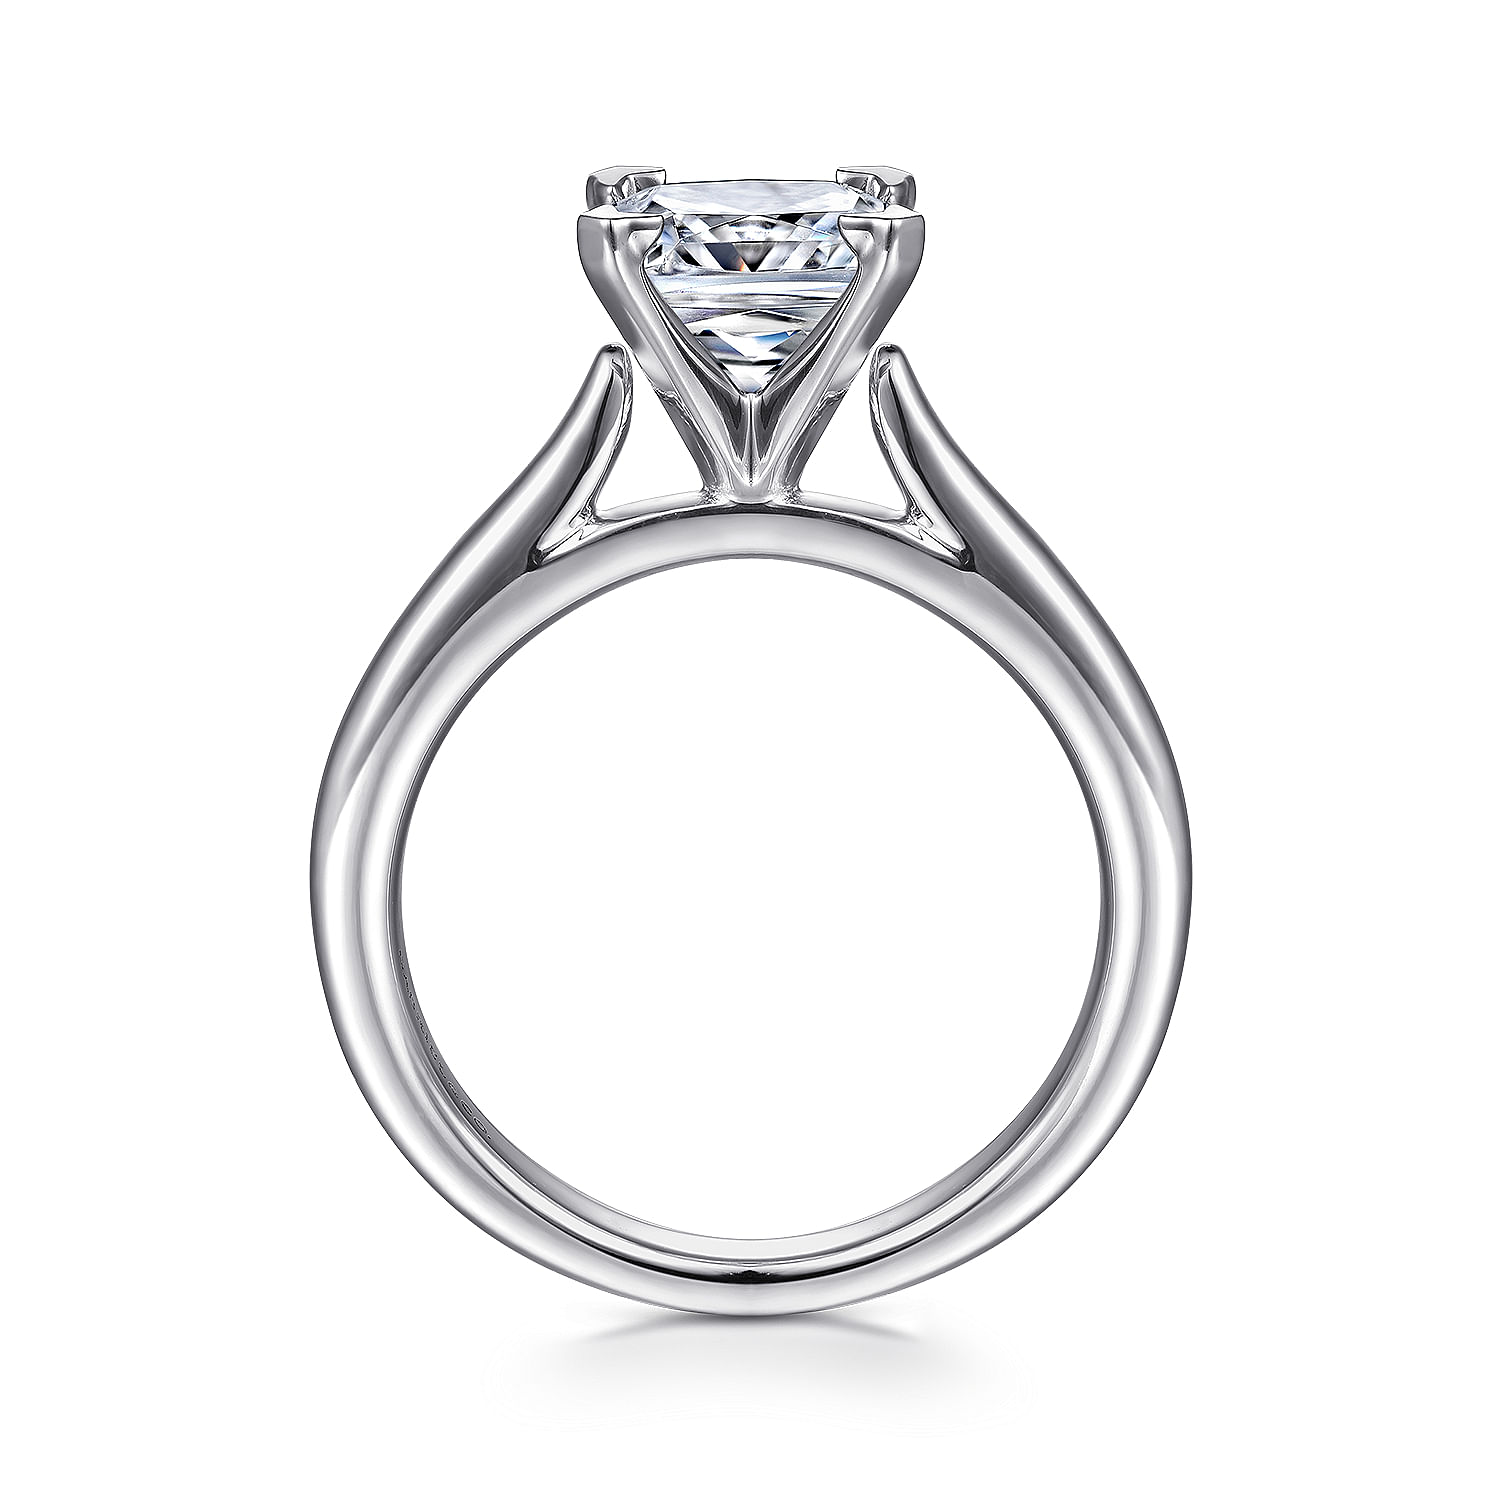 Michelle - 14K White Gold Princess Cut Diamond Engagement Ring - Shot 2